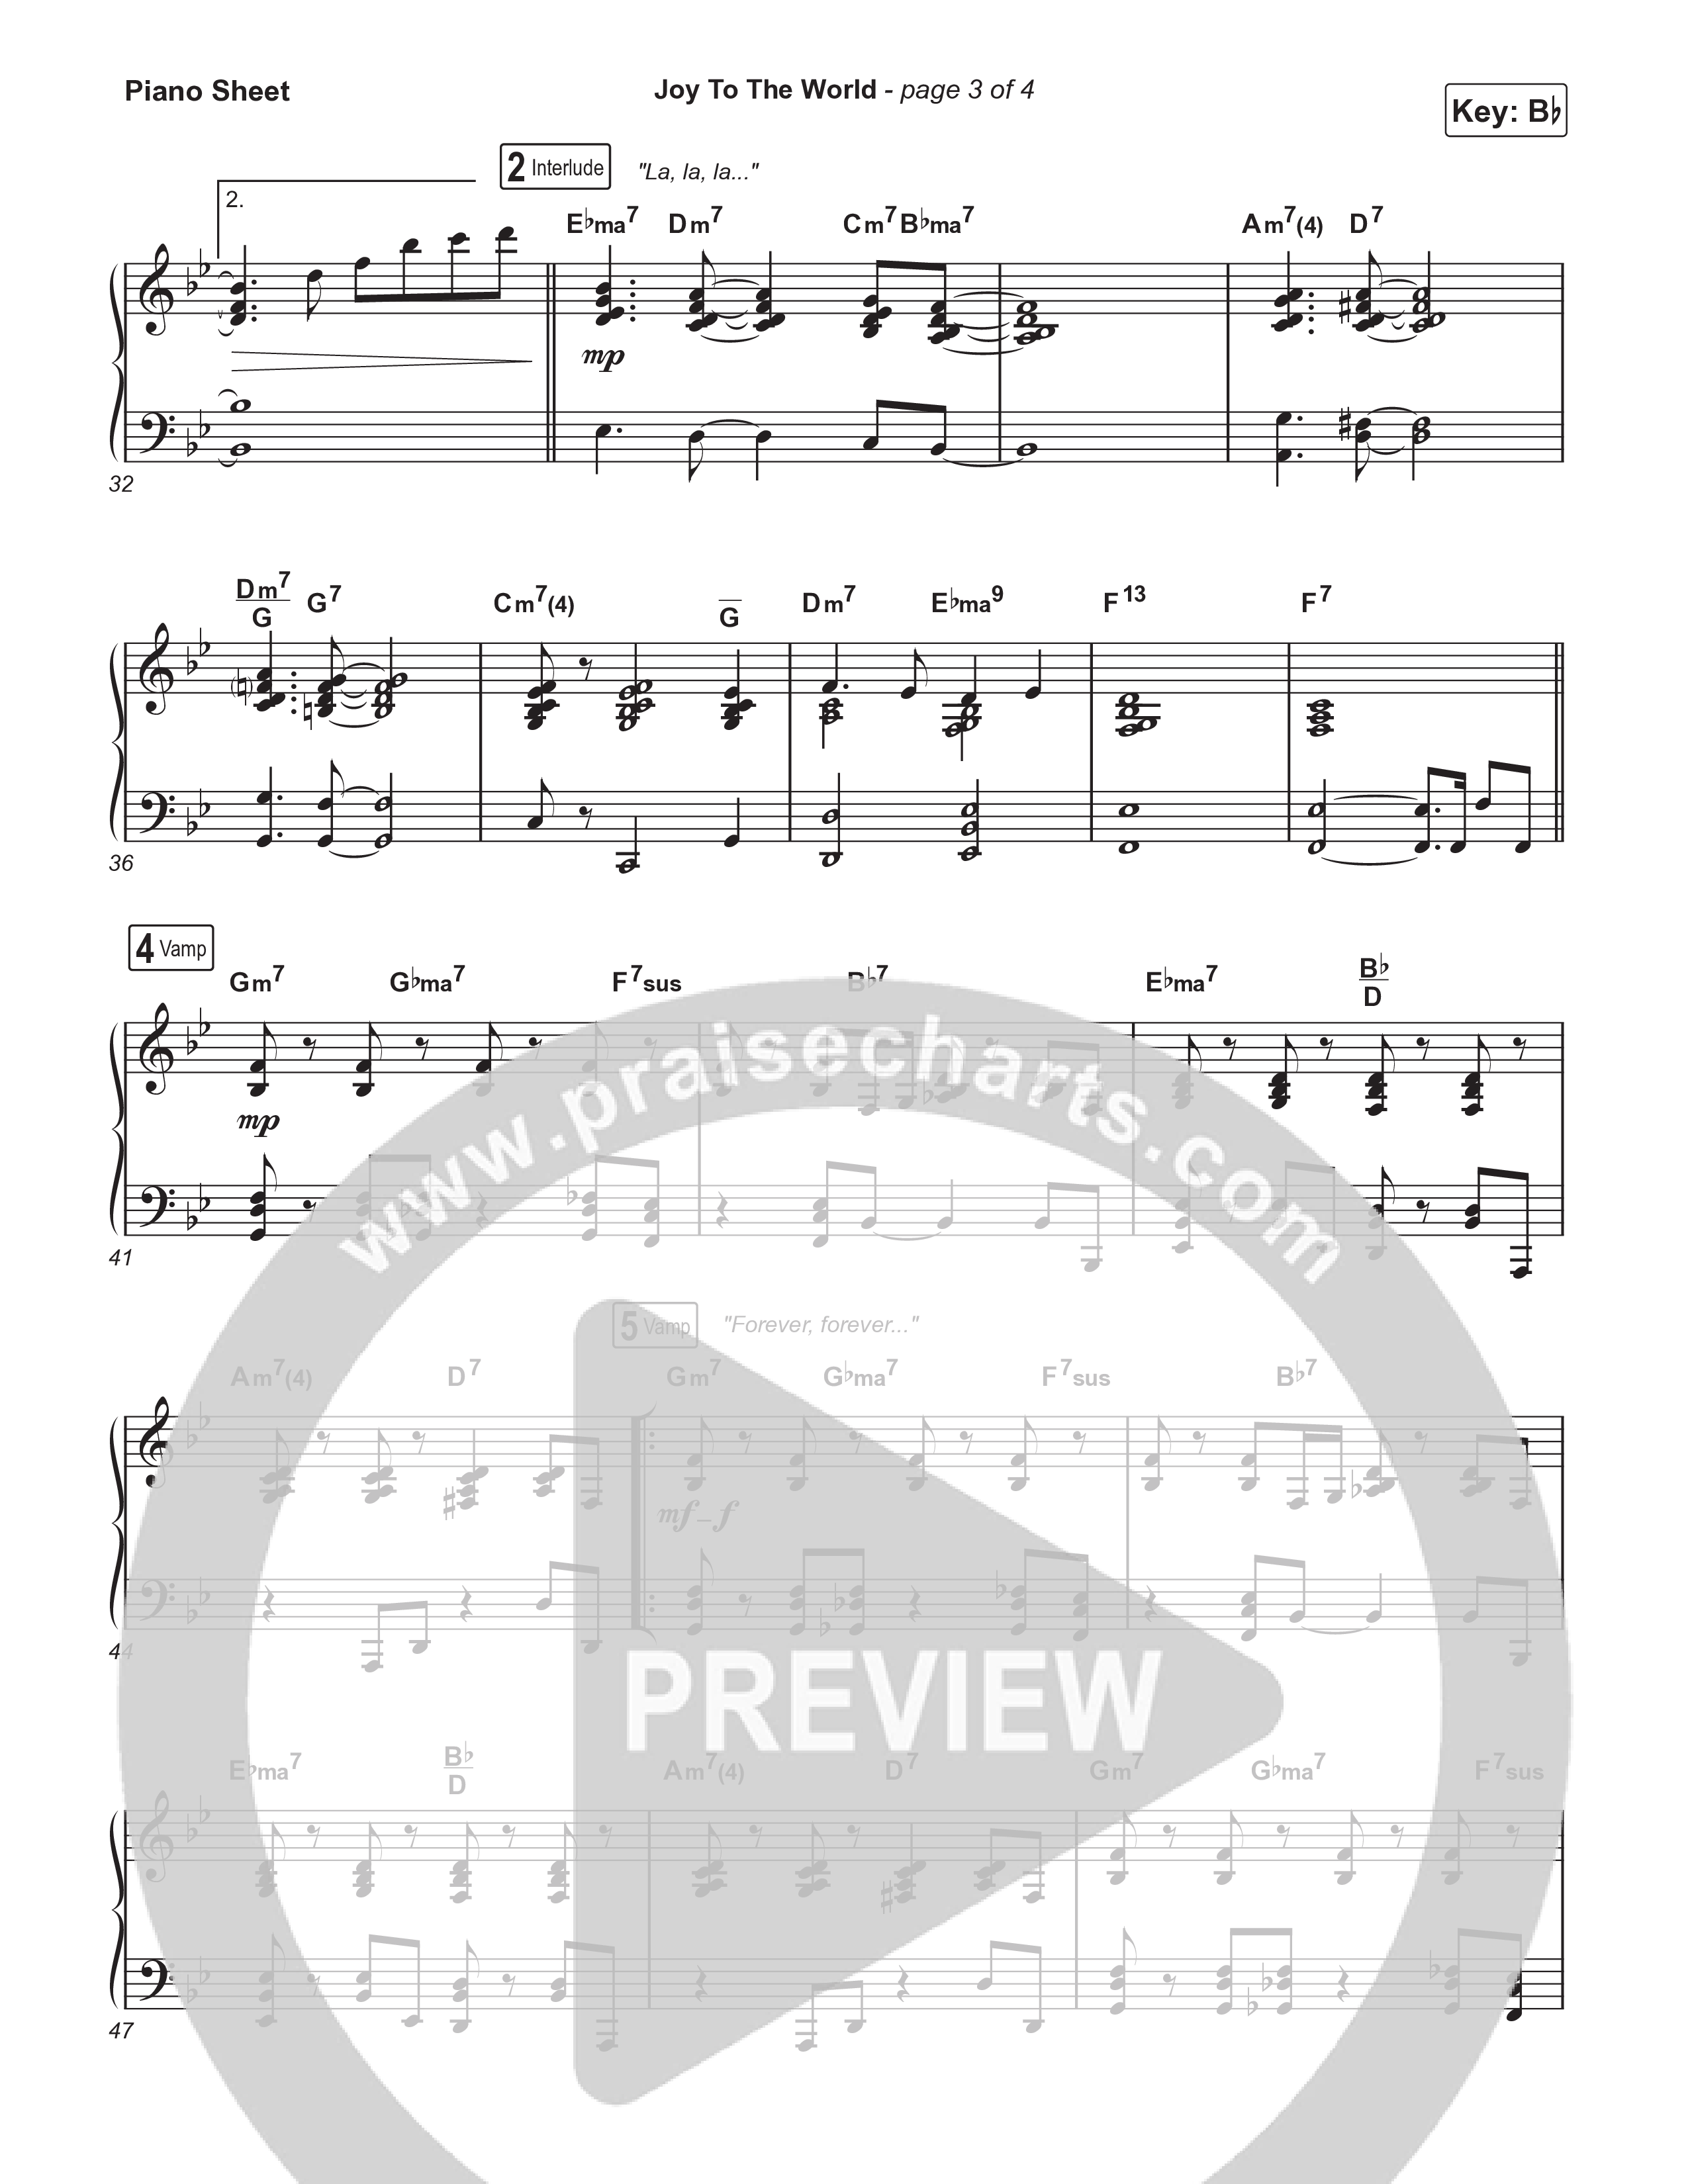 Joy To The World Piano Sheet (Kirk Franklin)